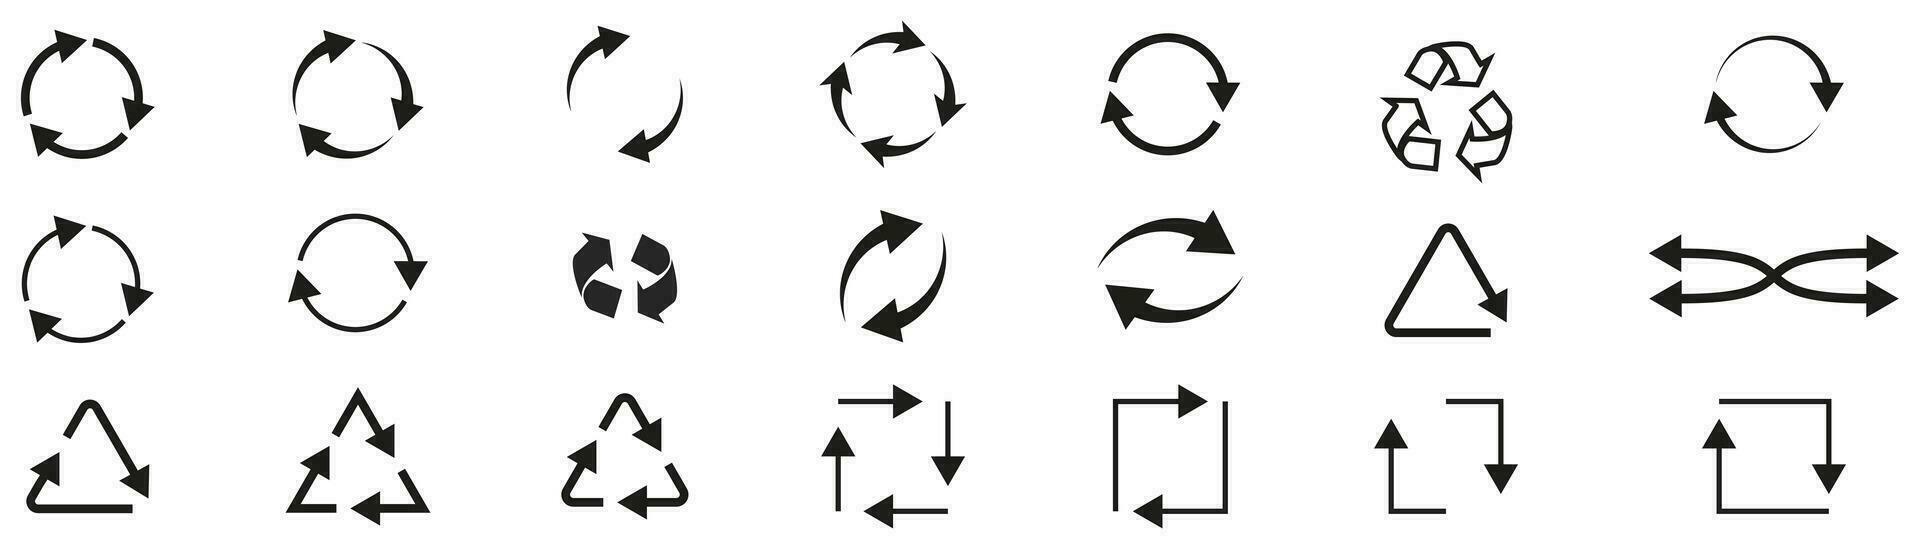 reciclar flechas en negro. cargando flecha pictogramas. circular rotación símbolo. reciclar signo. actualizar íconos recopilación. repitiendo lazo pictograma. vector eps 10